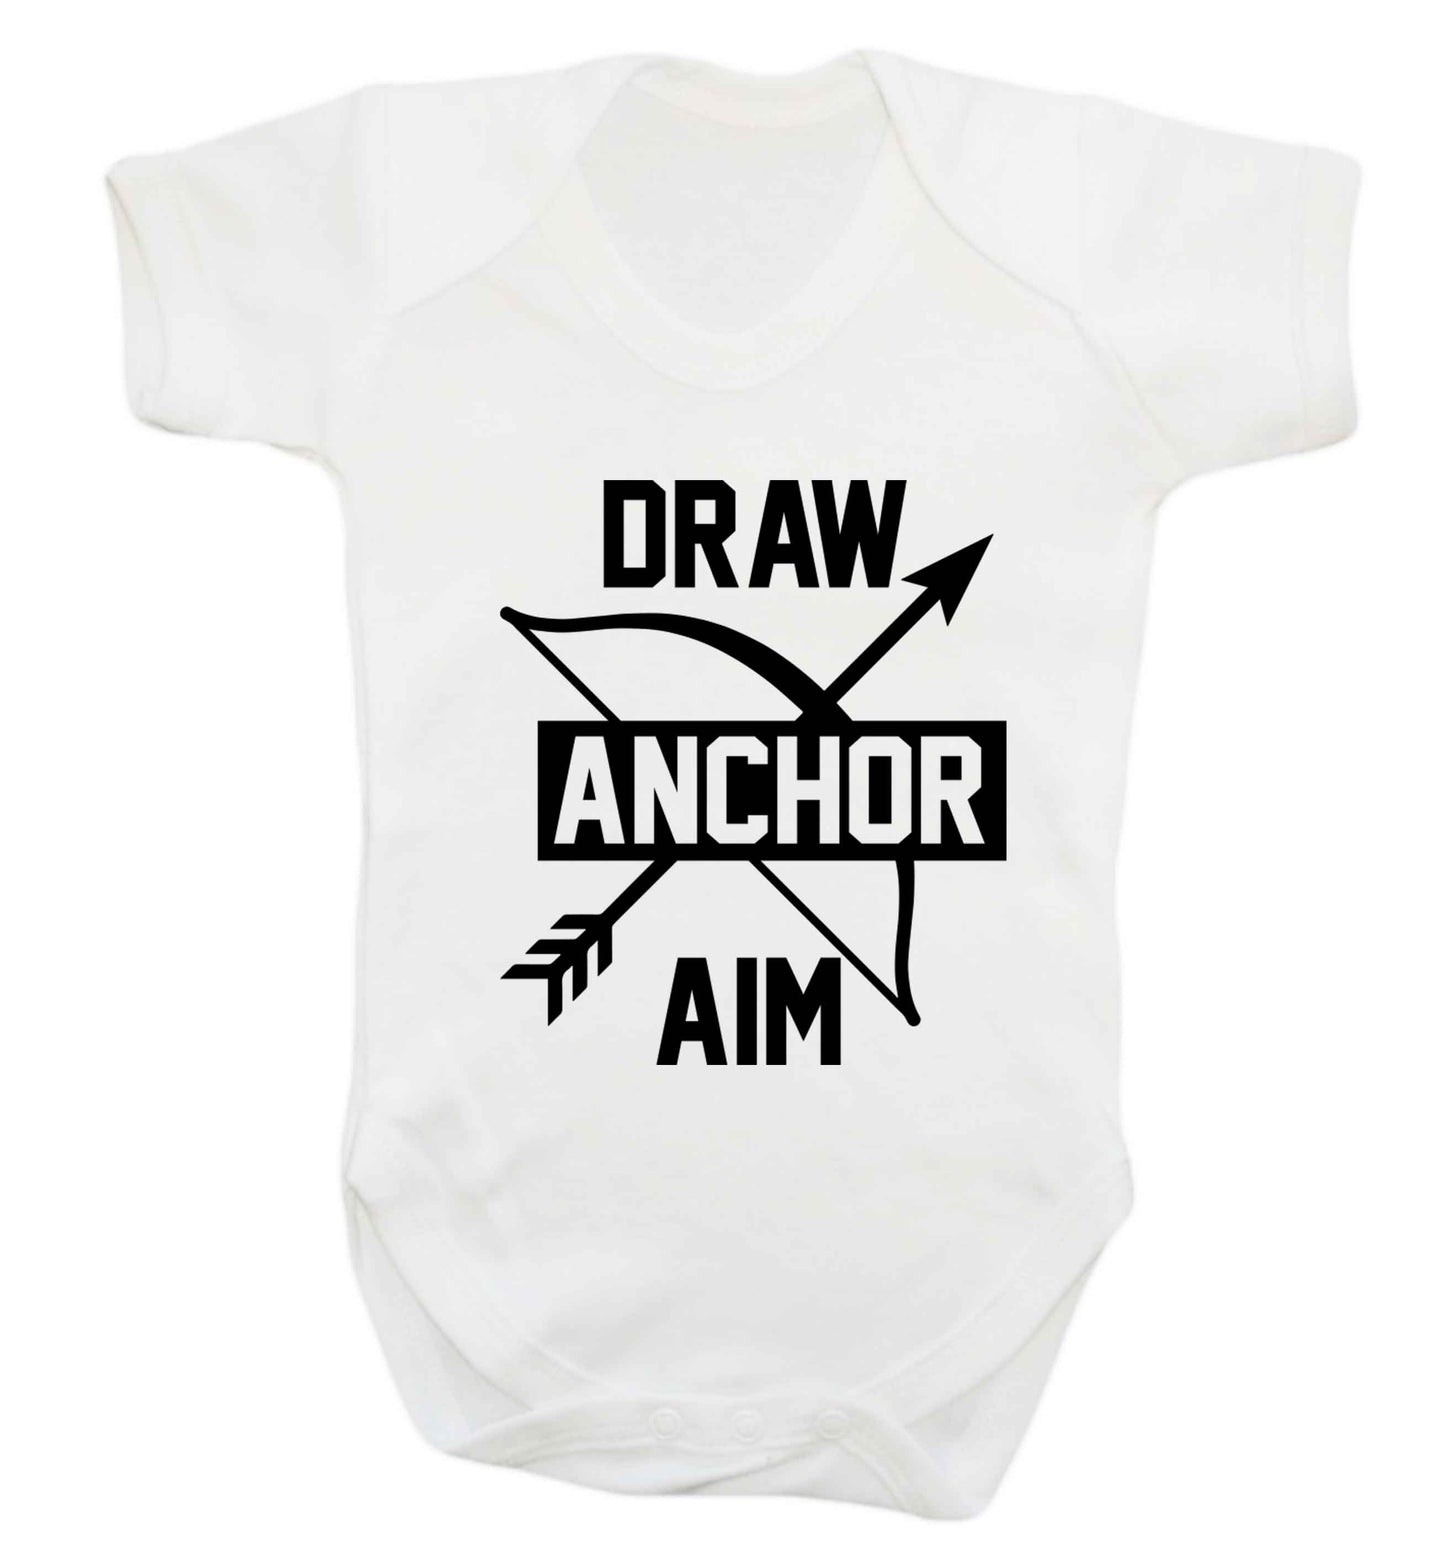 Draw anchor aim Baby Vest white 18-24 months